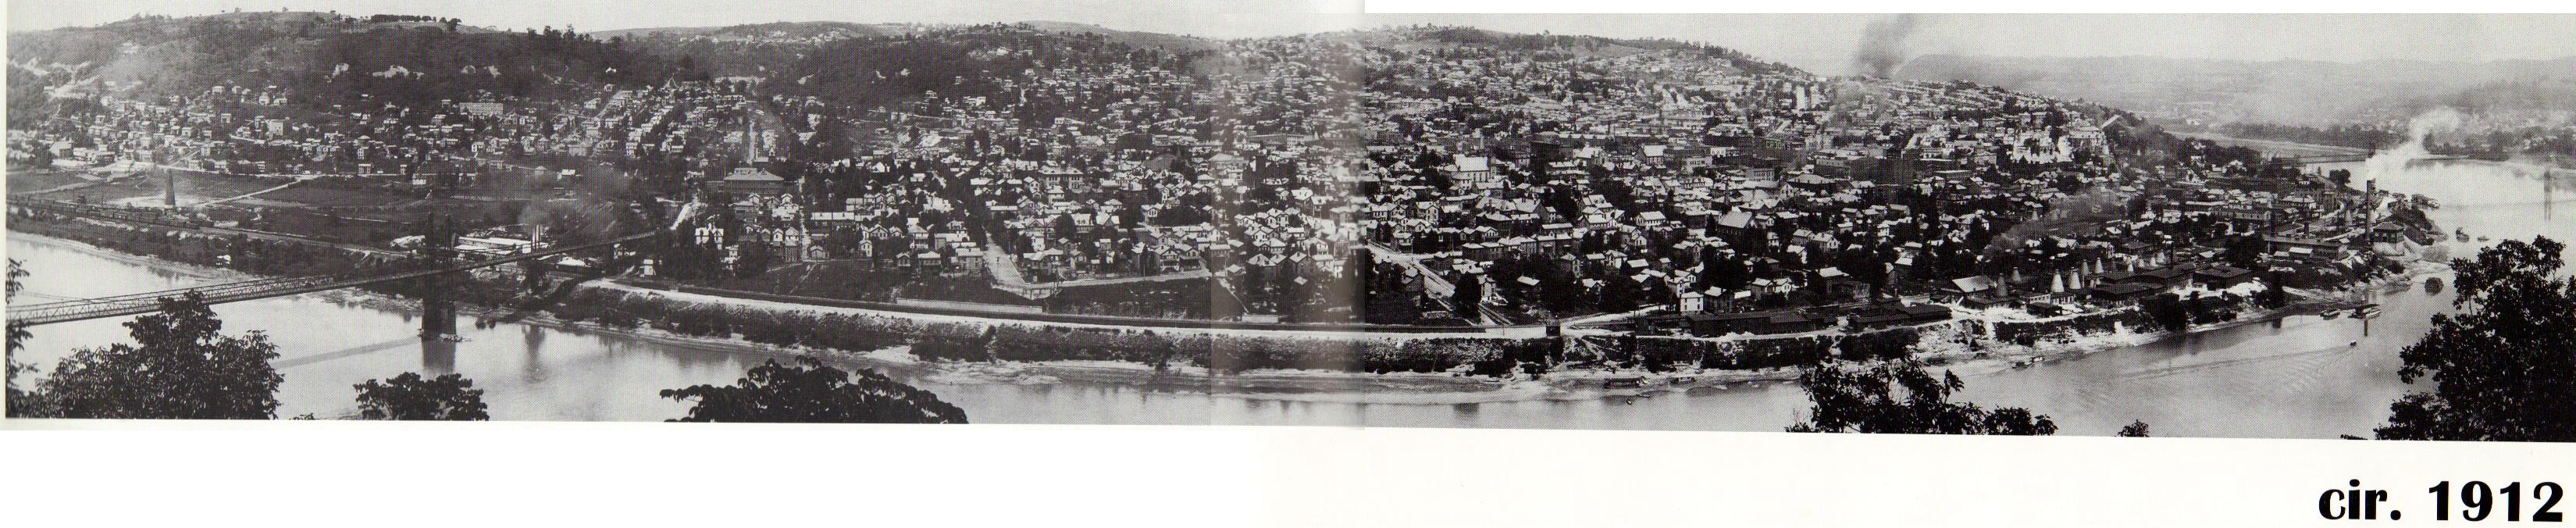 ELO panorama 1912